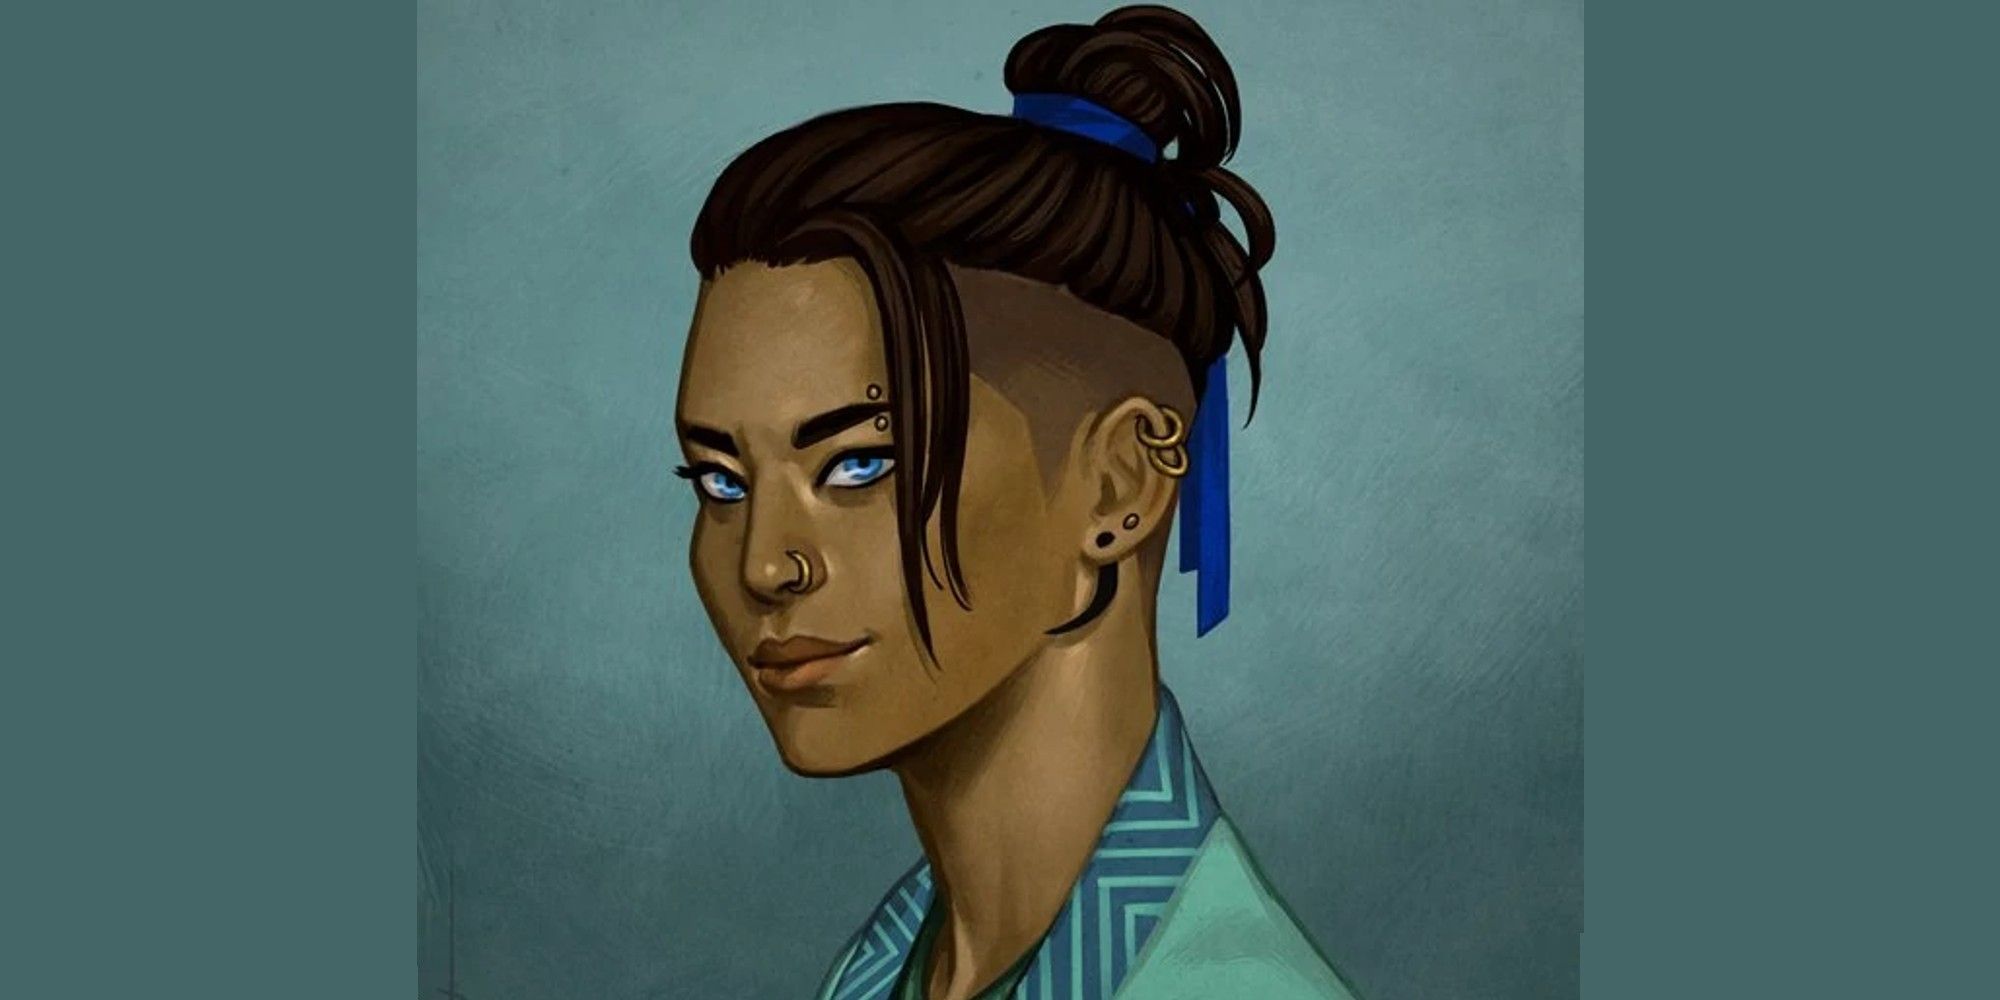 Beauregard Lionett character portrait with blue background